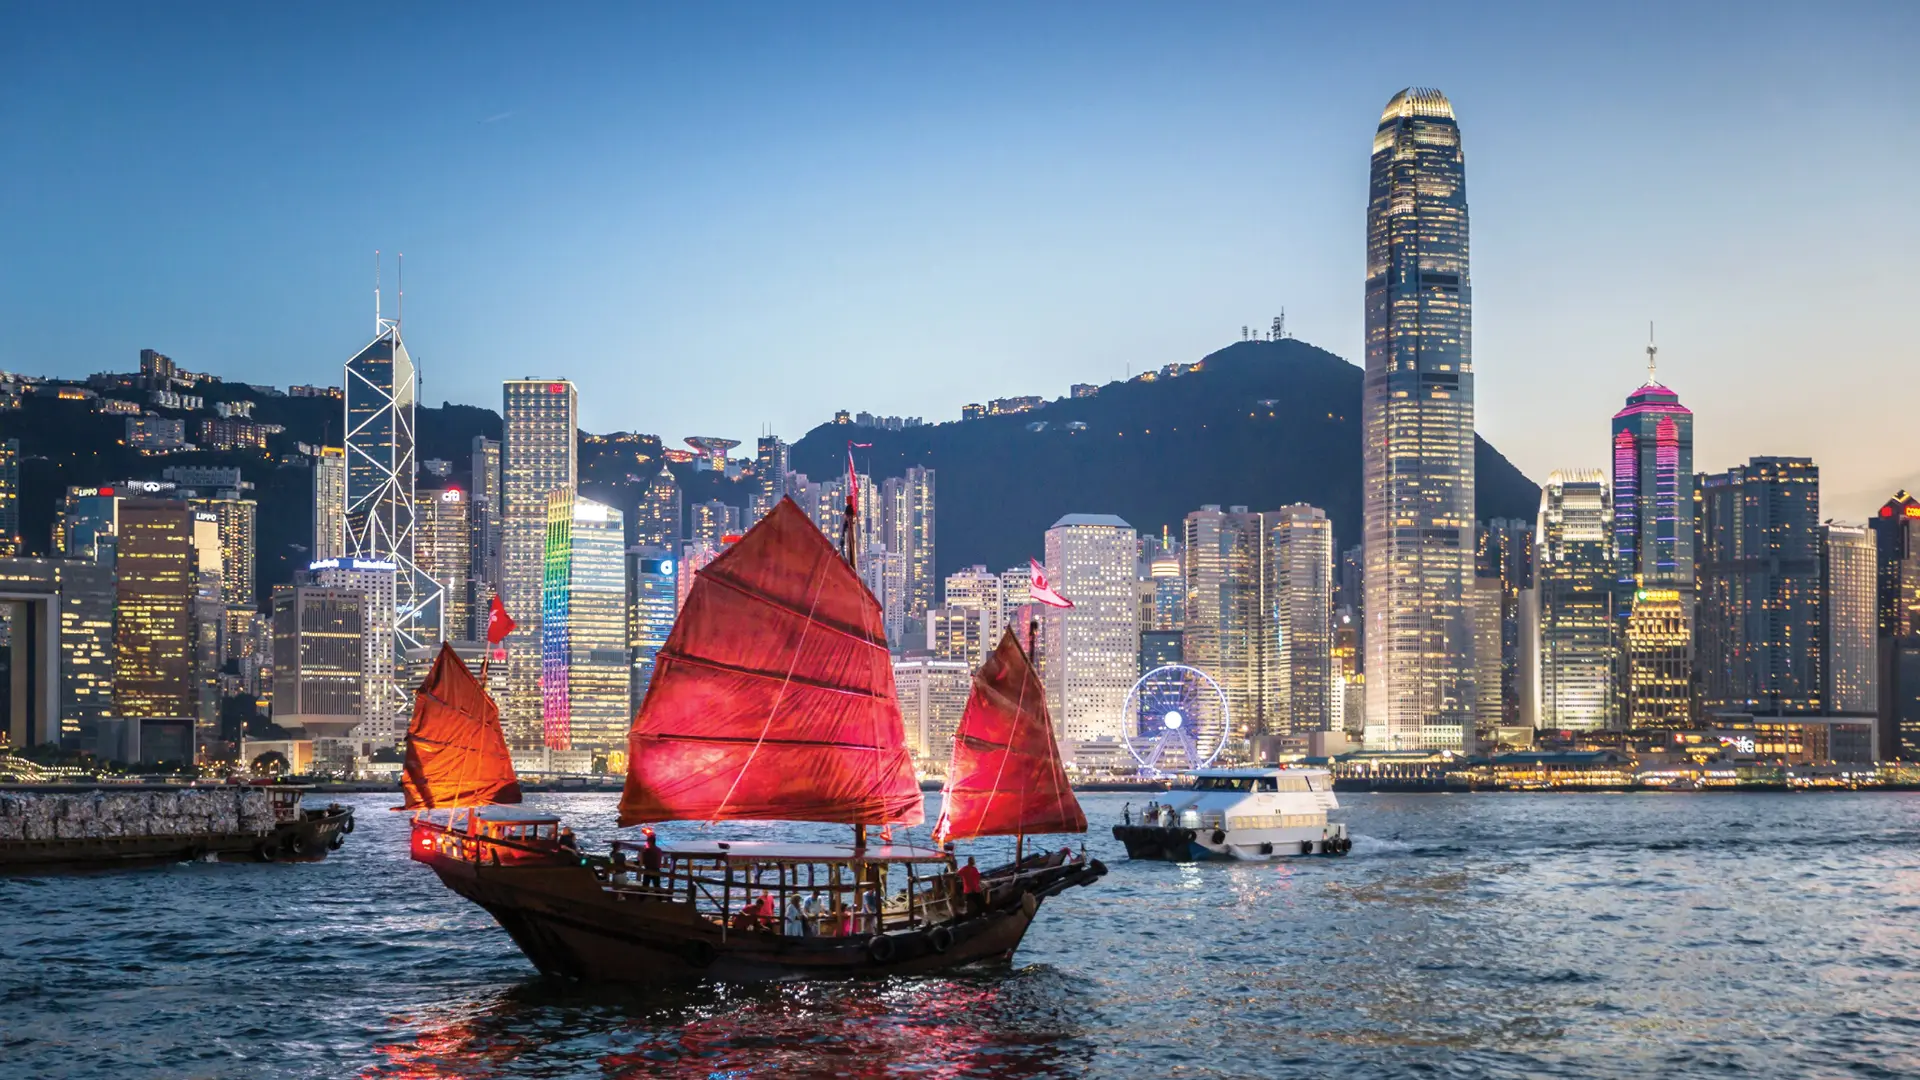 Destinations Articles - Hong Kong Travel Guide